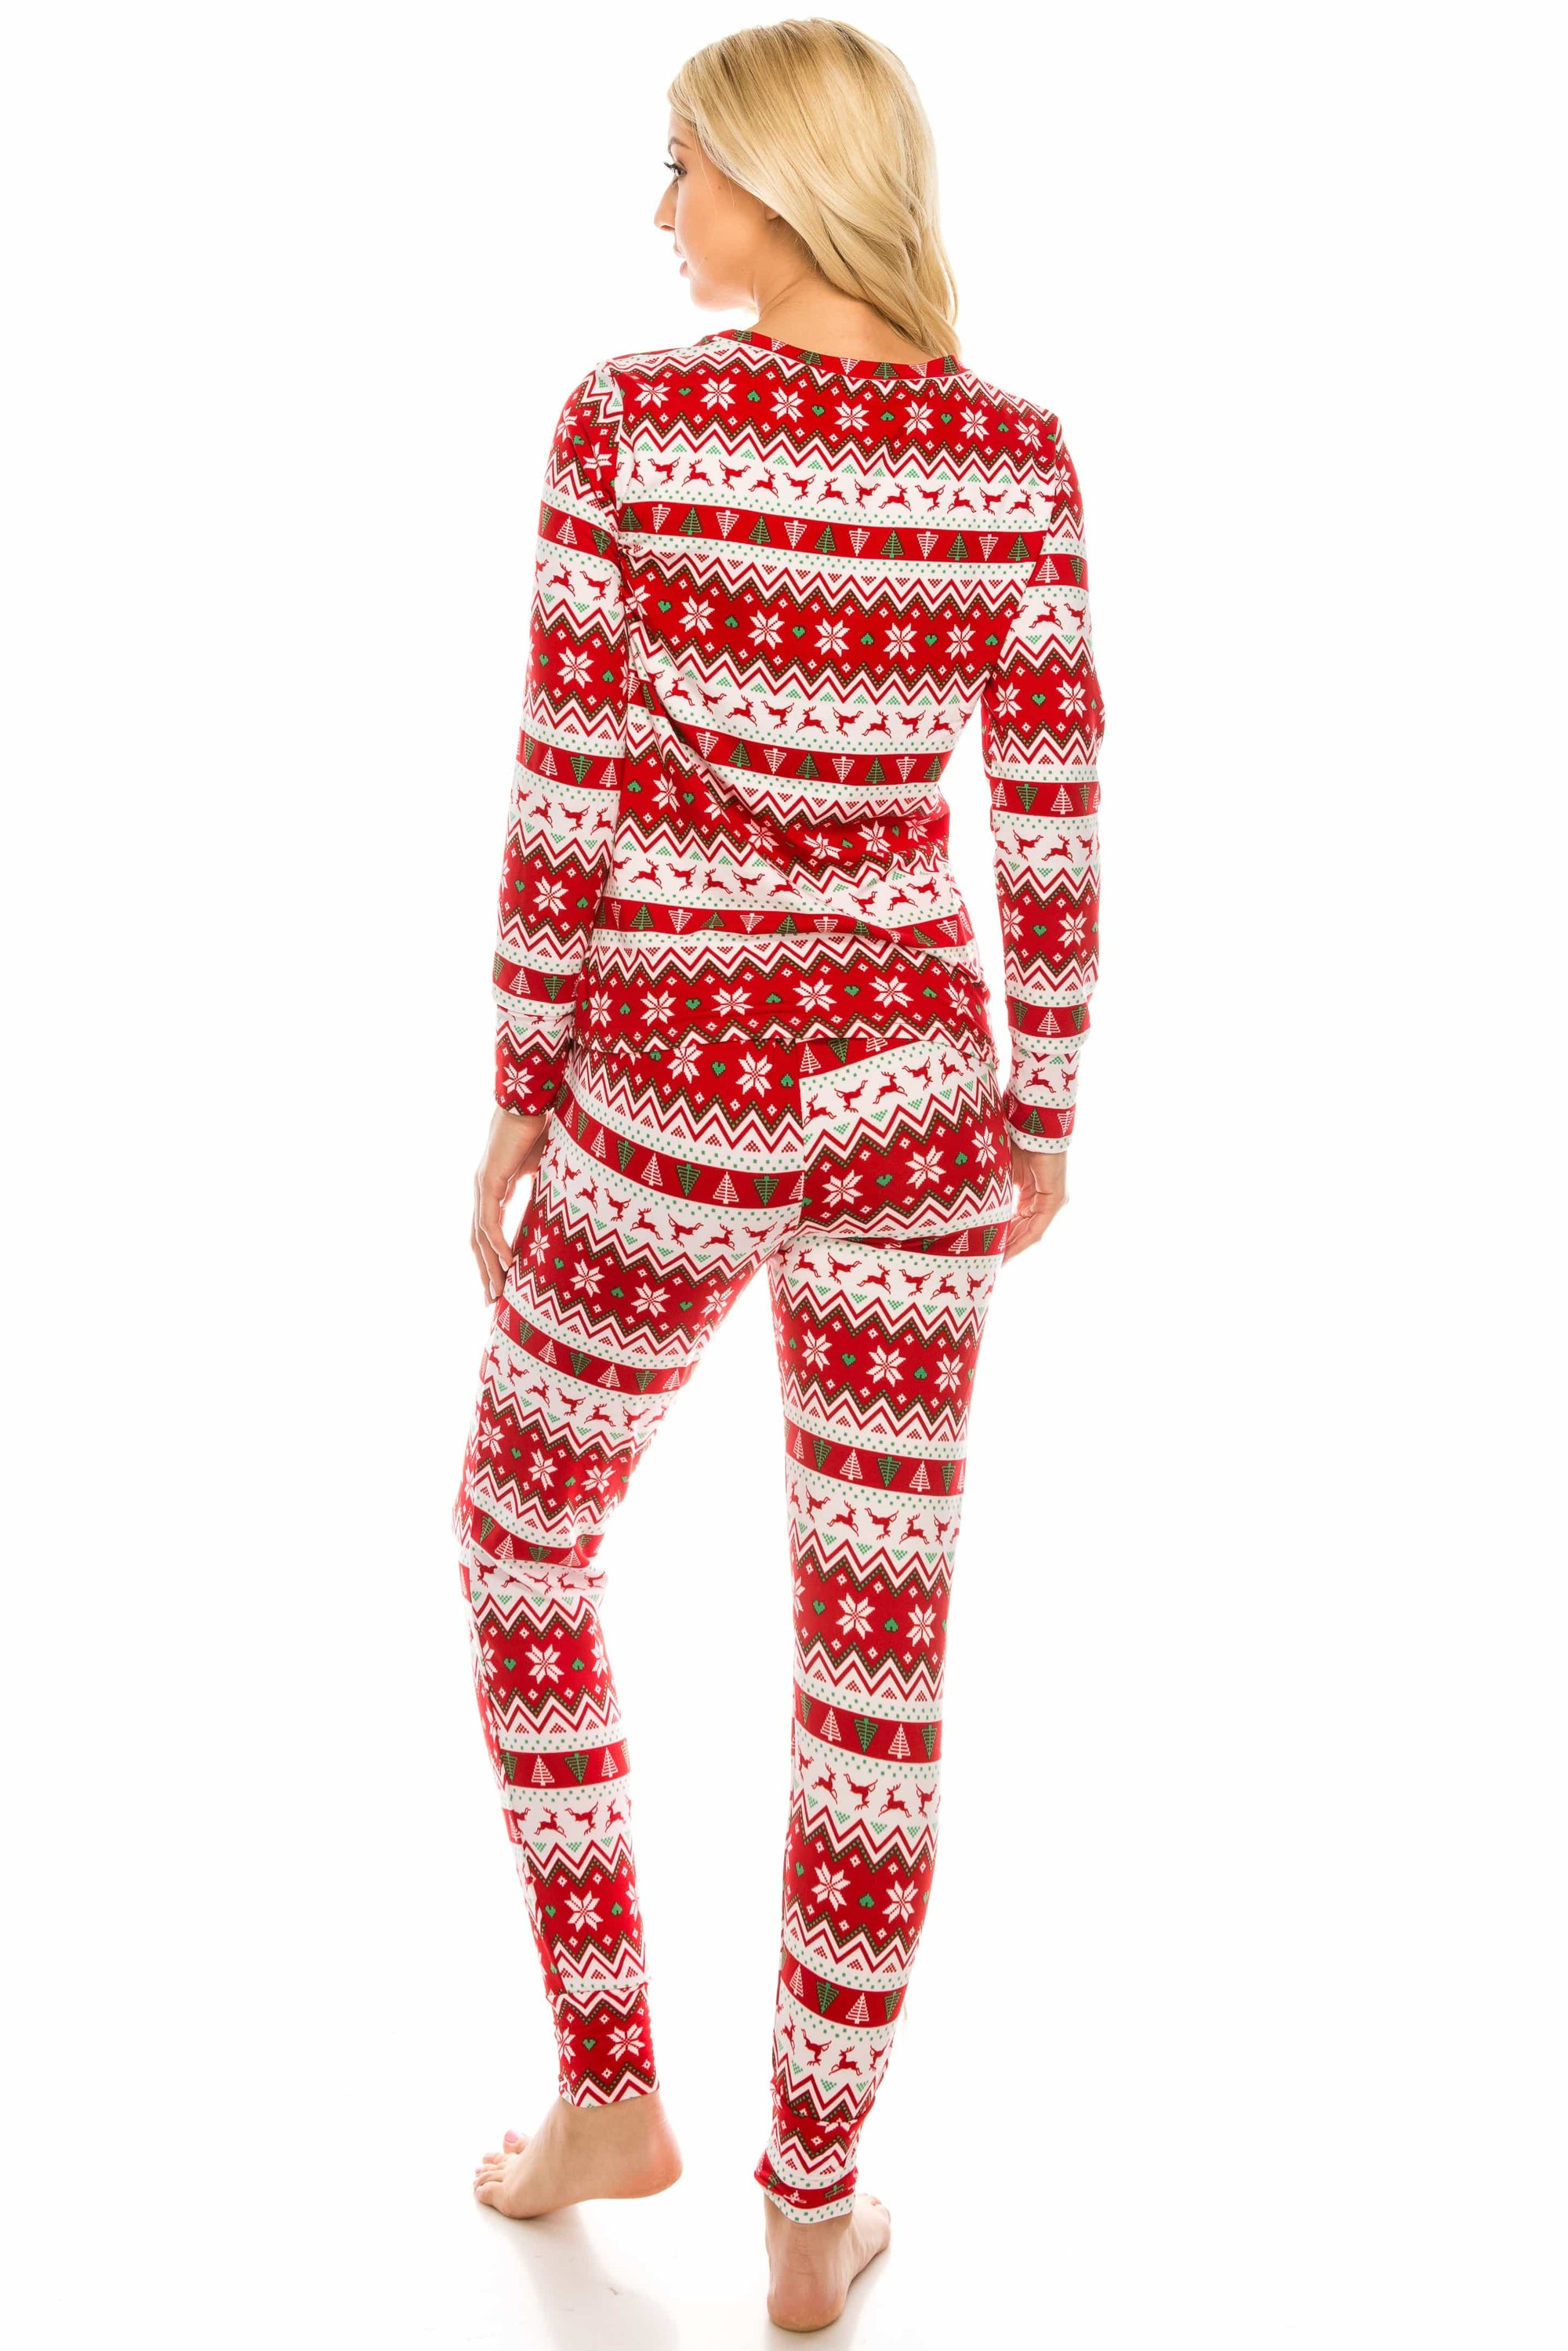 Women's Cozy Christmas Fleece-Lined 2-Piece Matching Jogger Sets